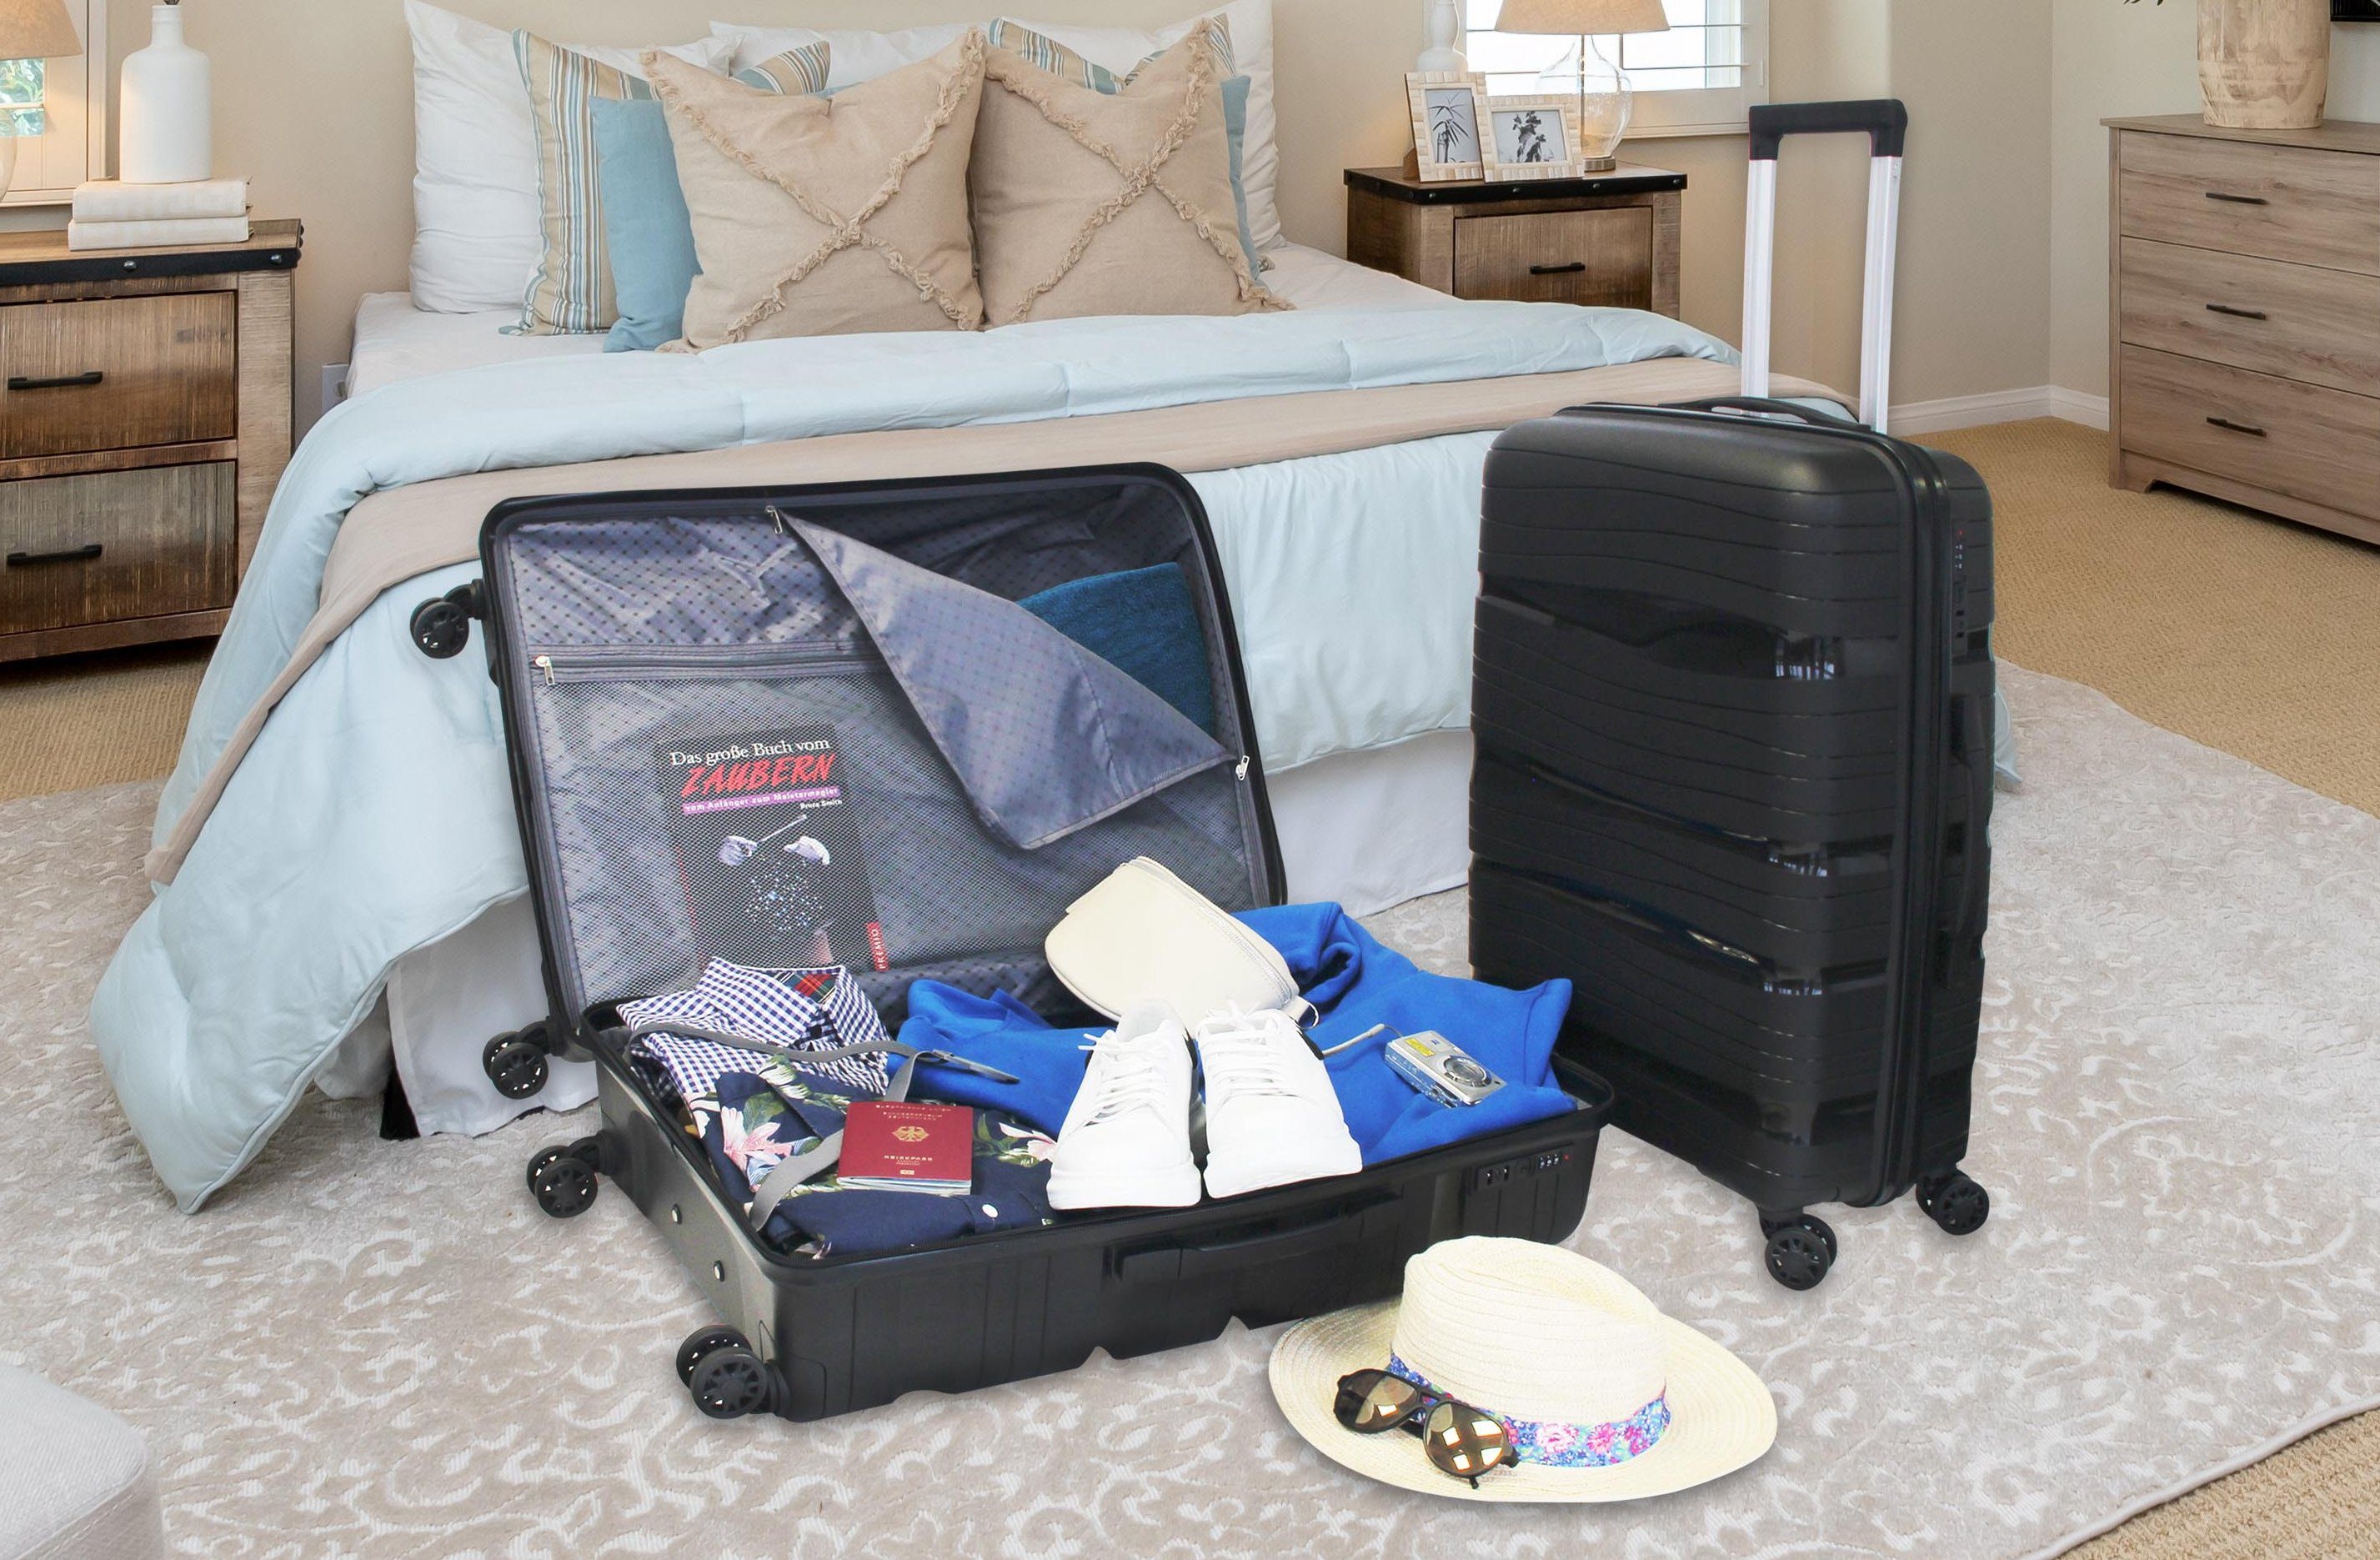 Größen: Trolley Rollen, Koffer oder ABS Kunststoff (3 Handgepäck/L/XL 4 Frentree 360° TSA-Zahlenschloss, aus mit Weinrot drehbar SET)